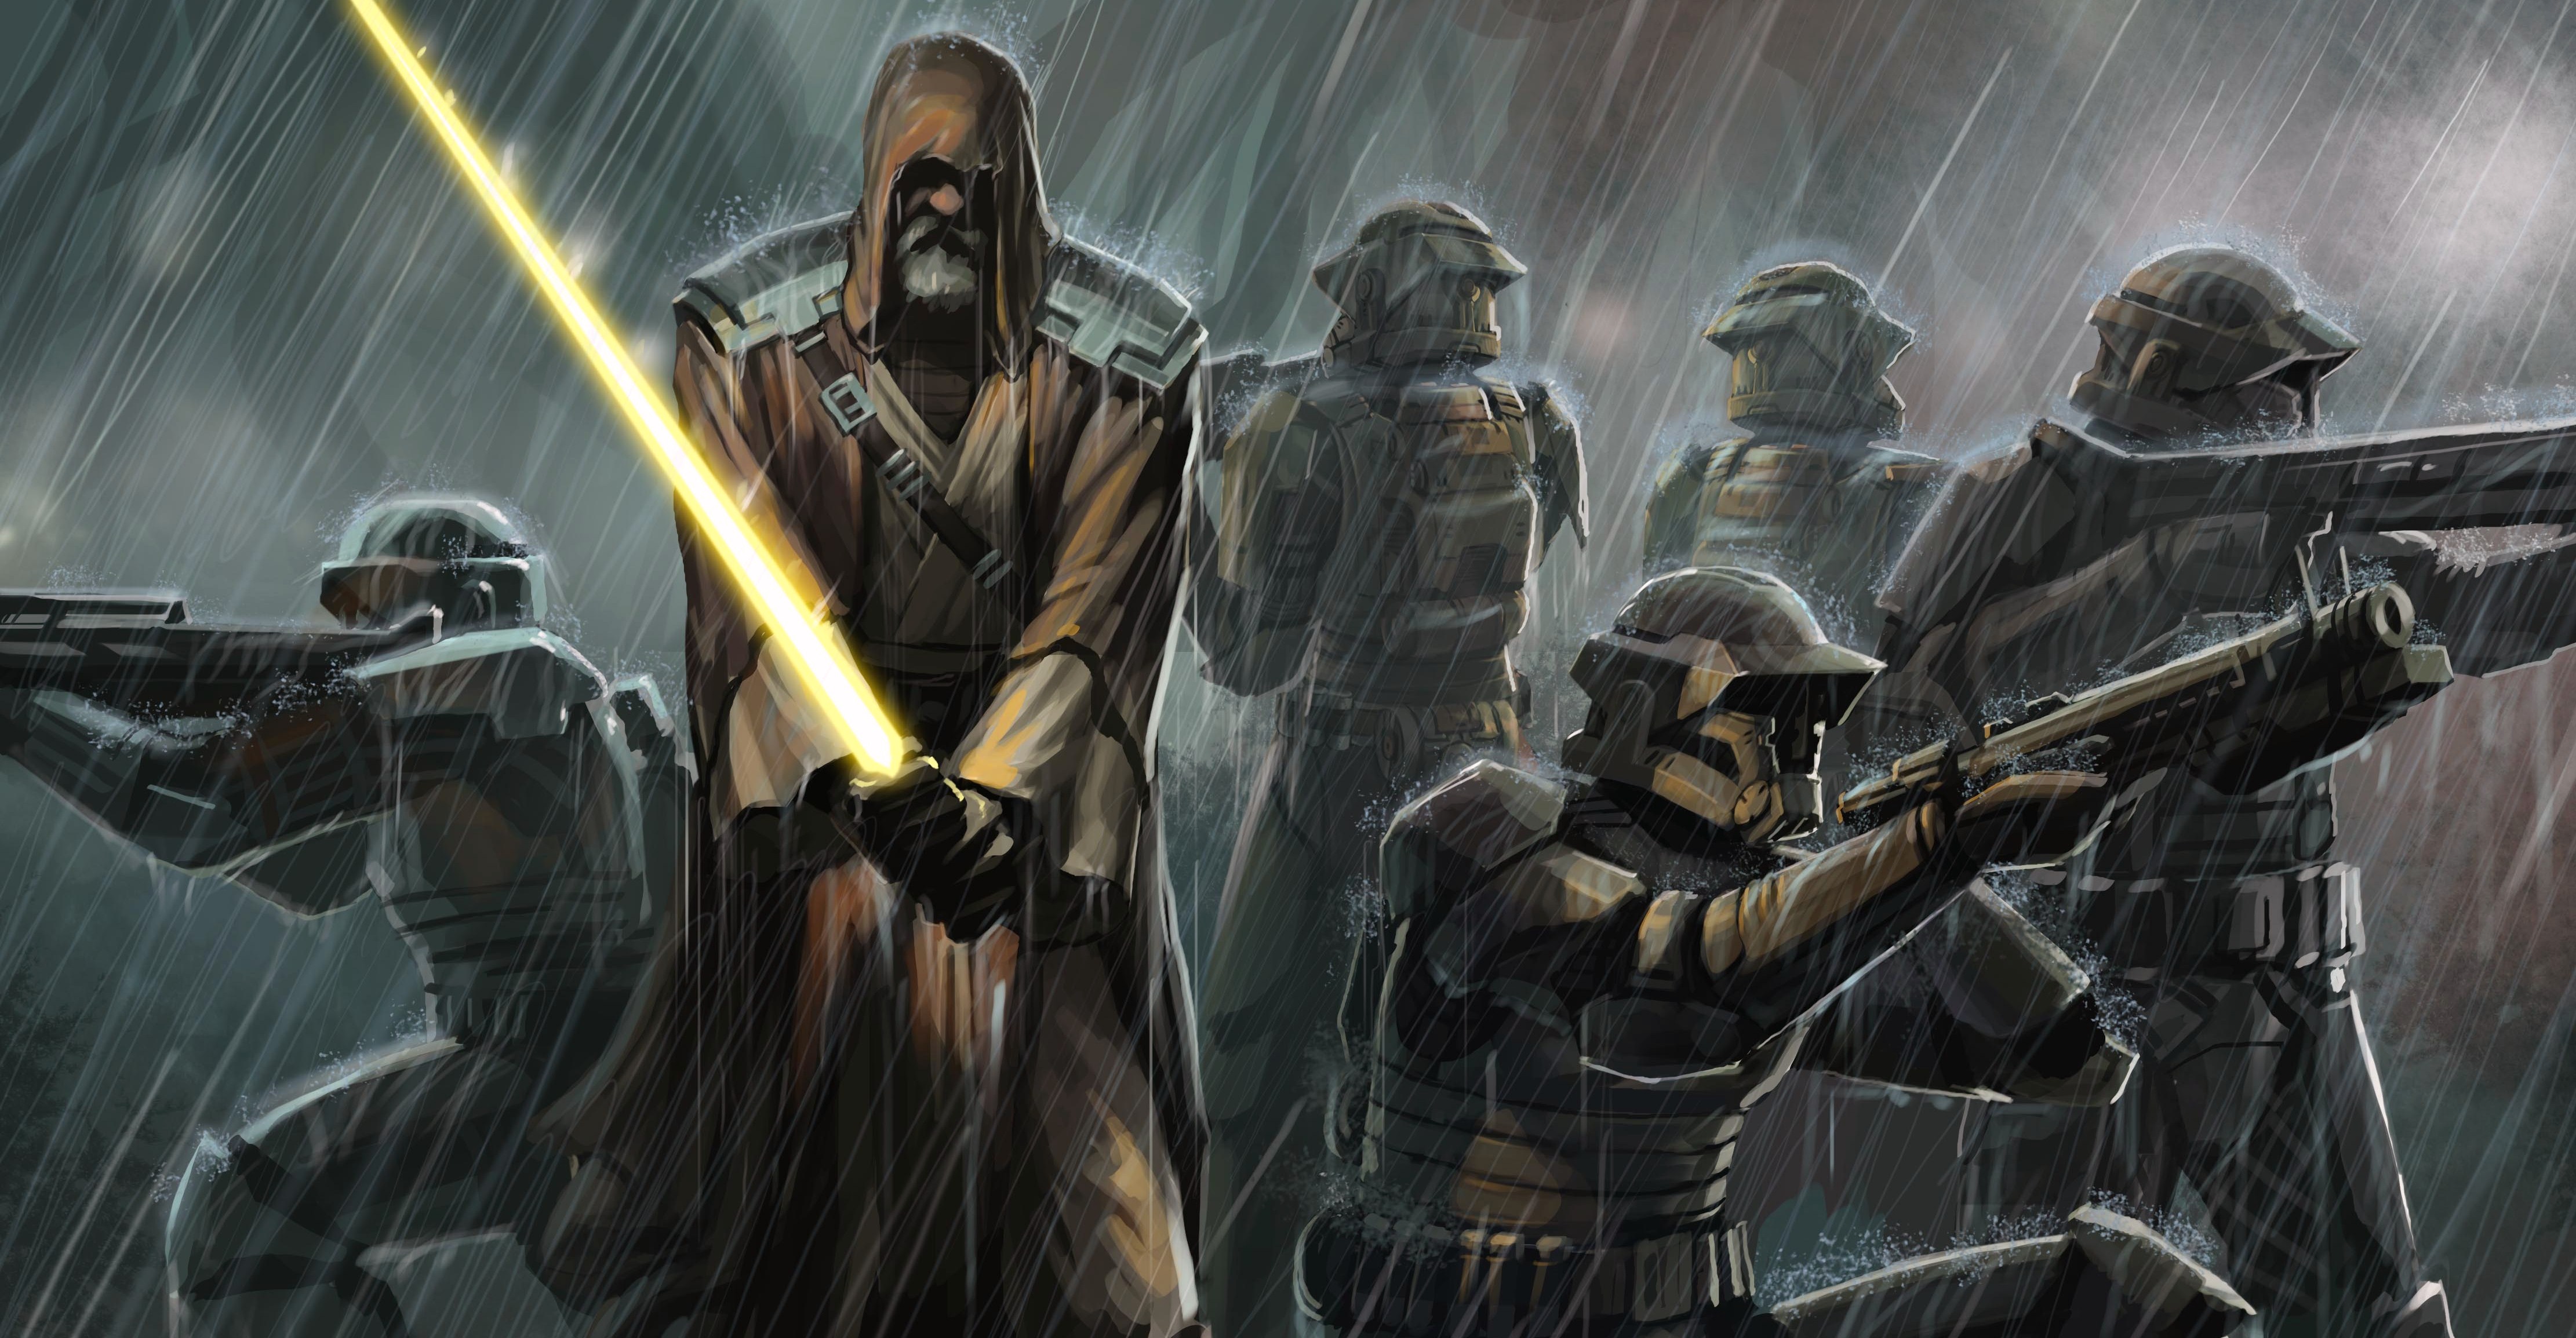 Star Wars, Jedi, Old Republic Soldiers, Old Republic - desktop wallpaper